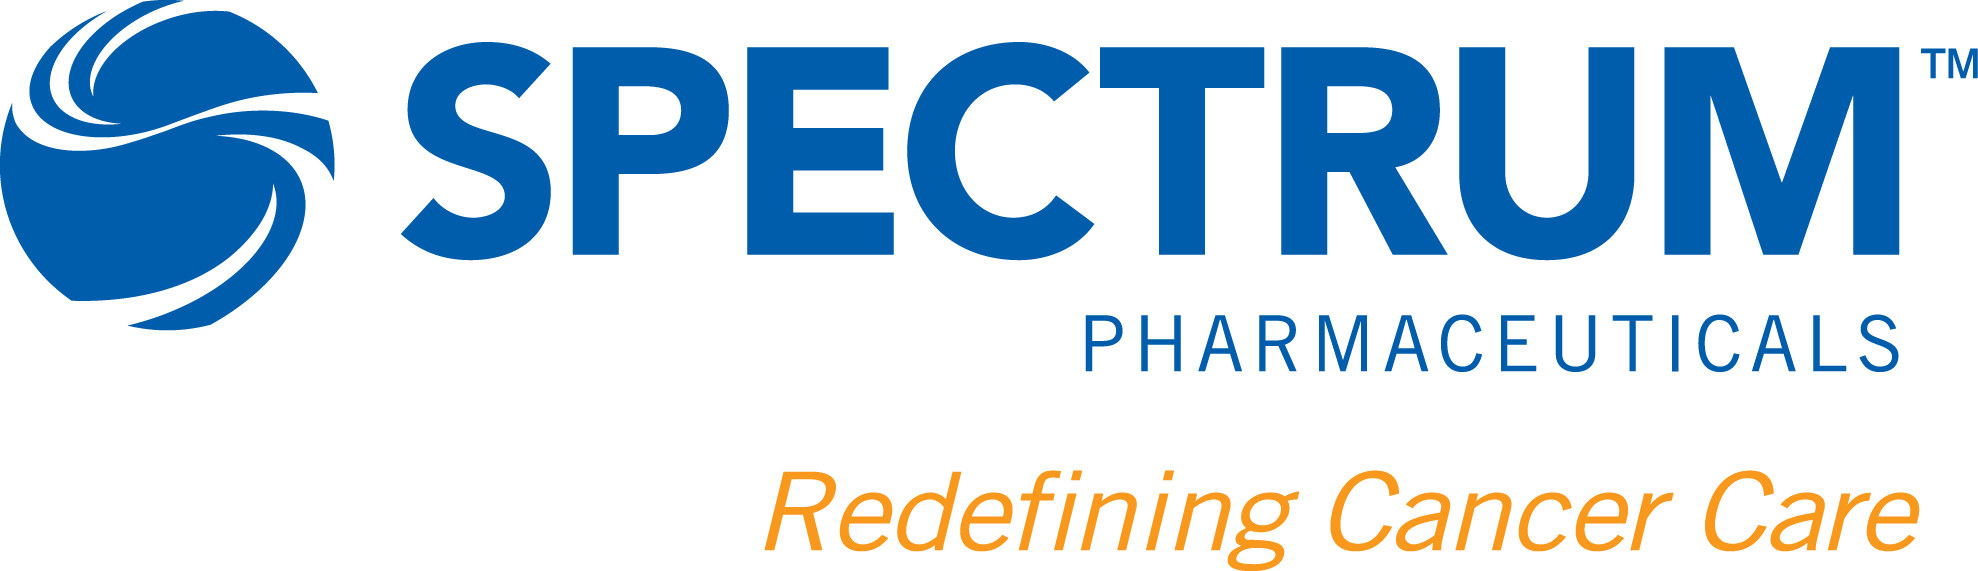 Spectrum Pharmaceuticals, Inc. Company Logo